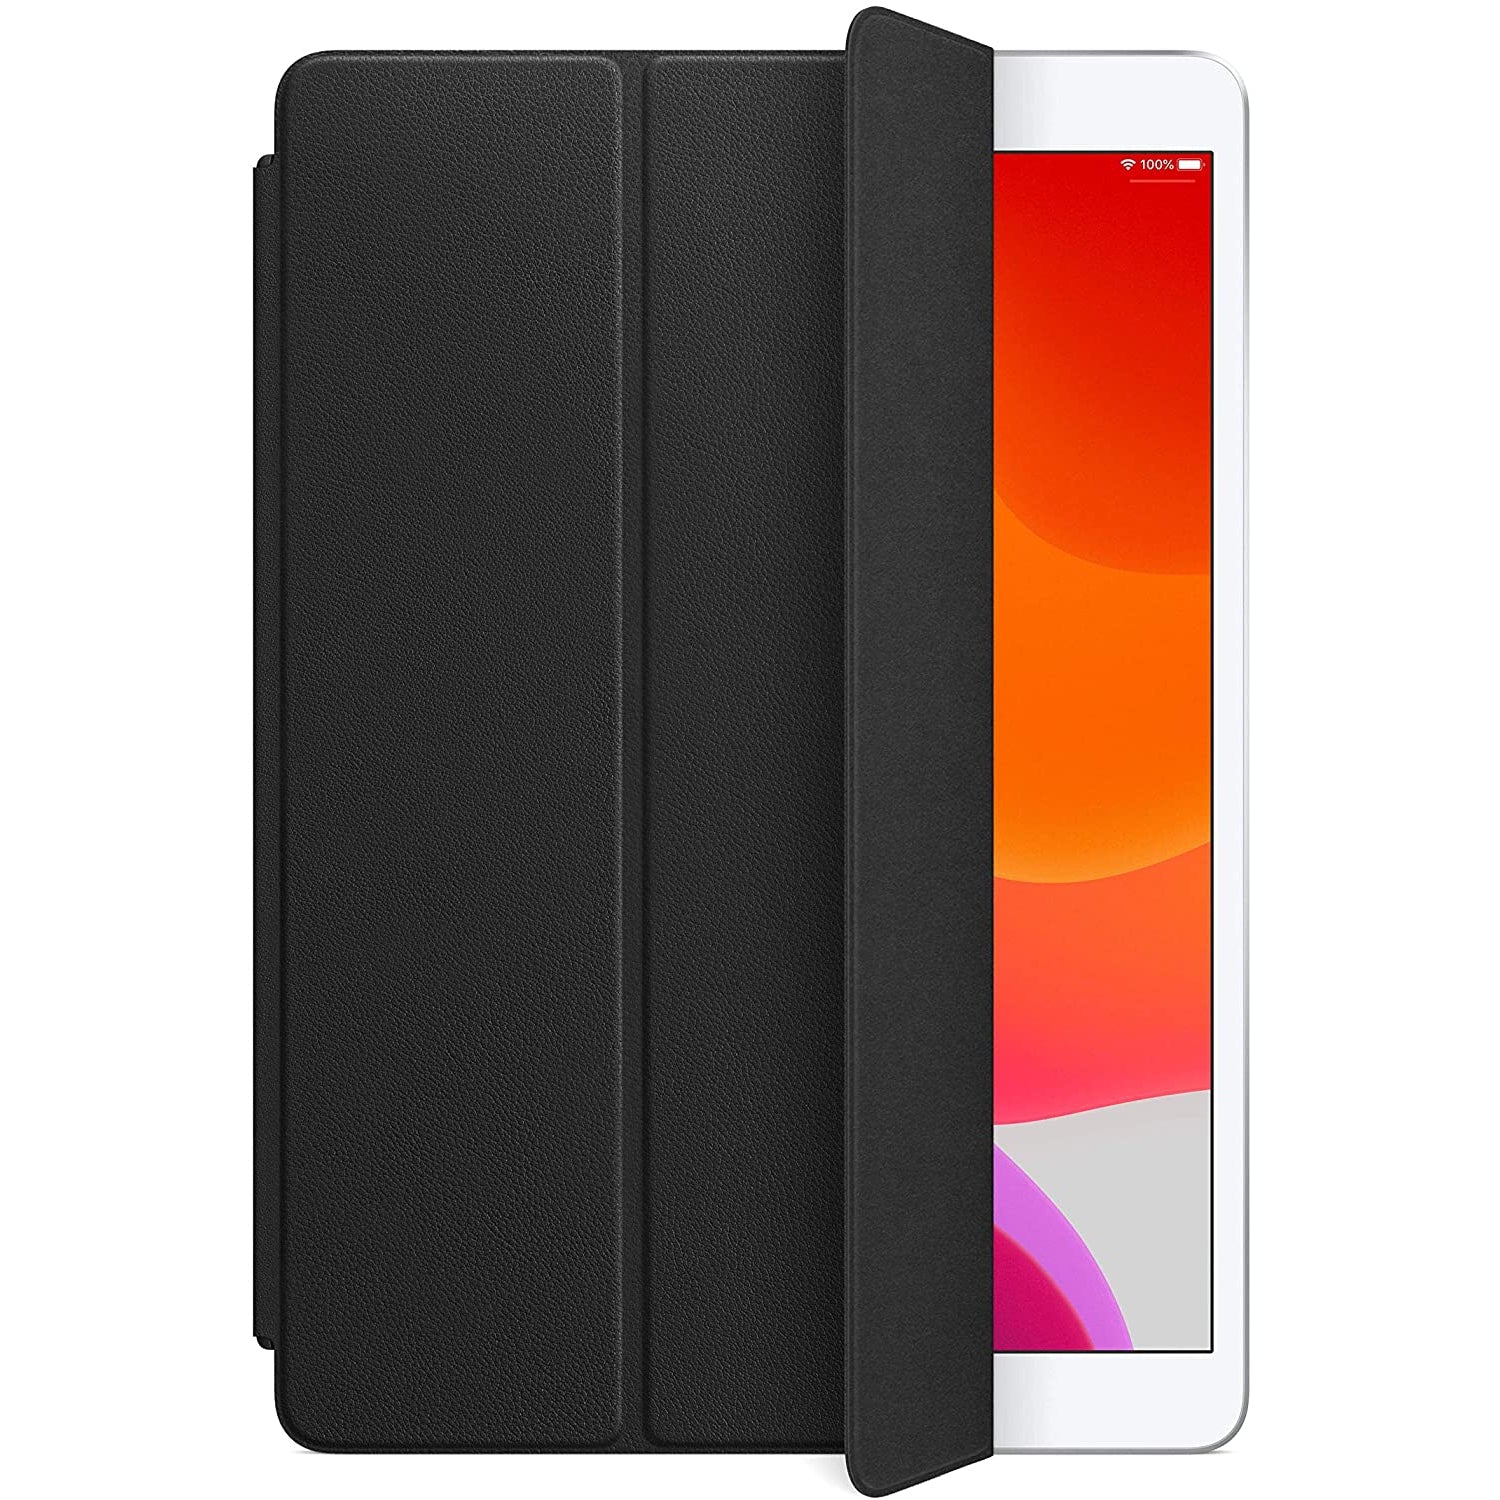 Apple iPad Pro 10.5-Inch Leather Smart Cover MPUD2 - Black - Refurbished